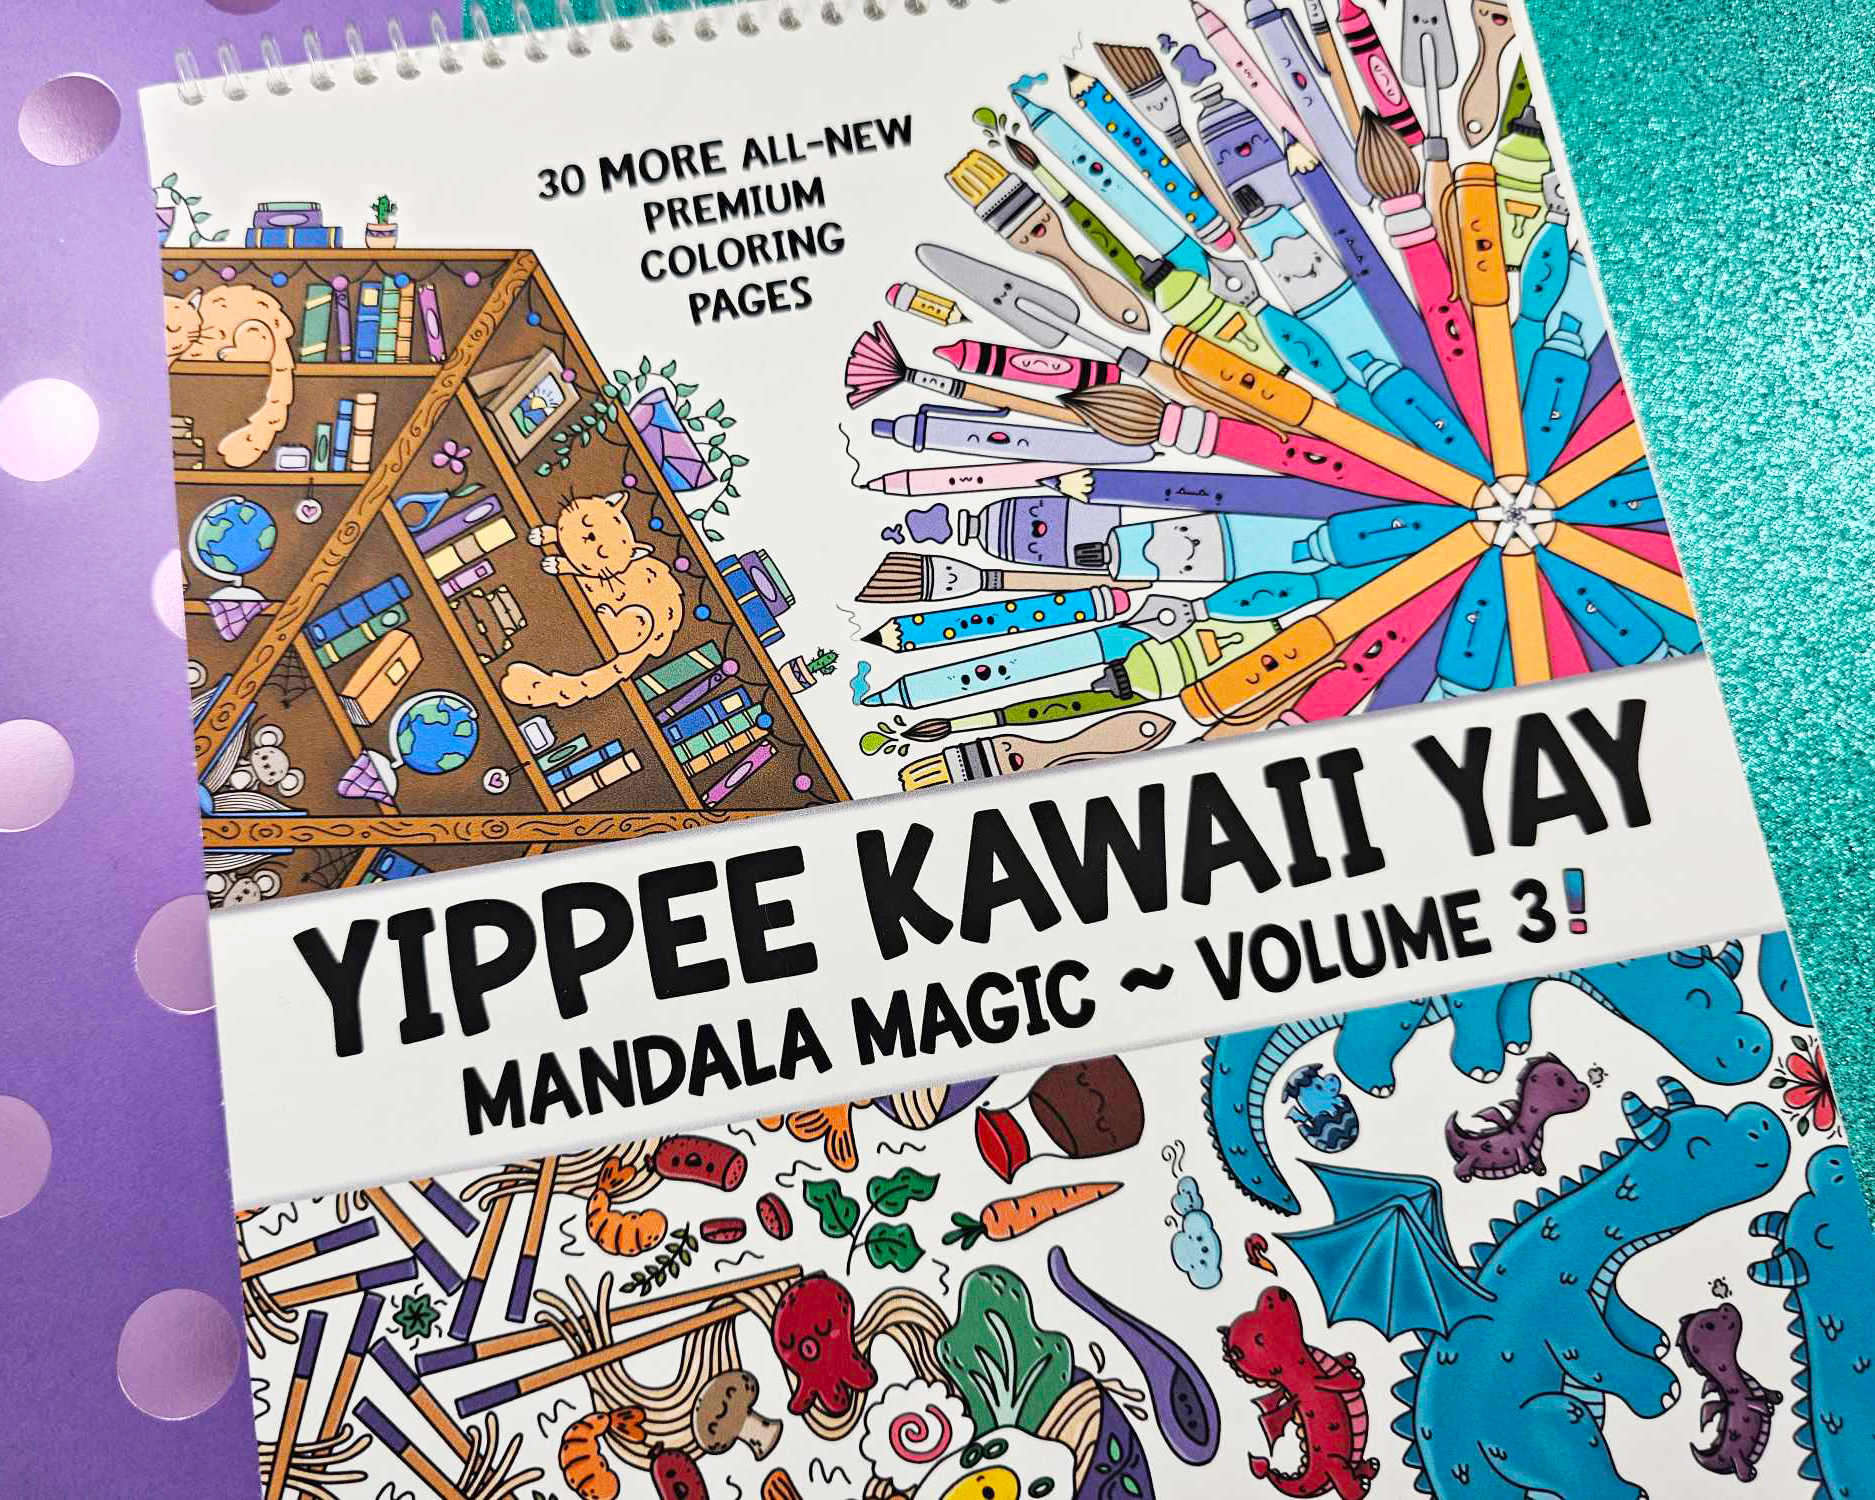 Yippee Kawaii Yay: Mandala Magic Volume 3